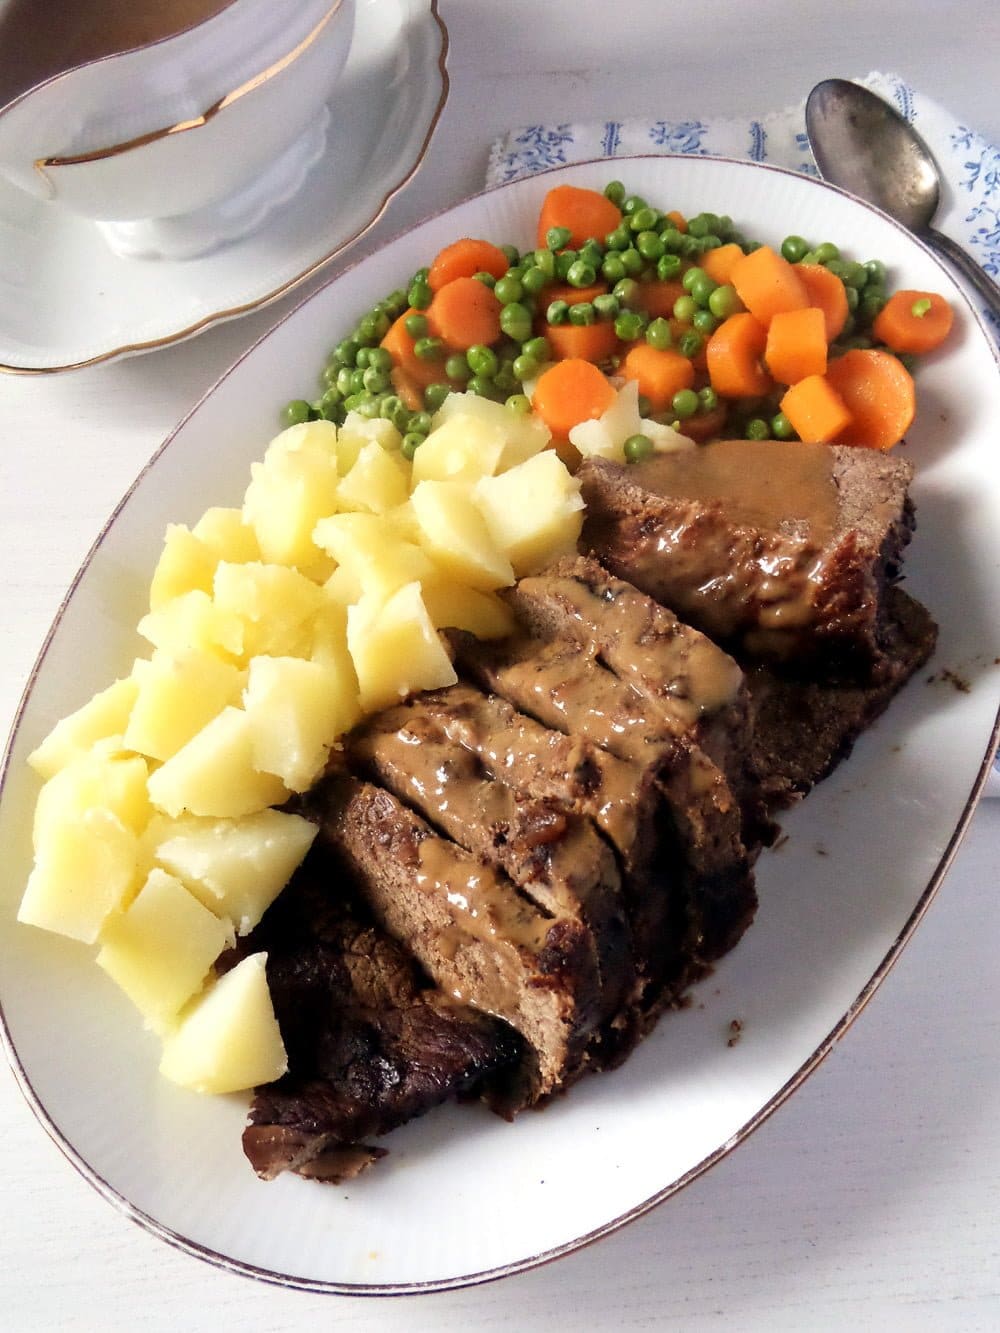 Balsamic Roast Beef